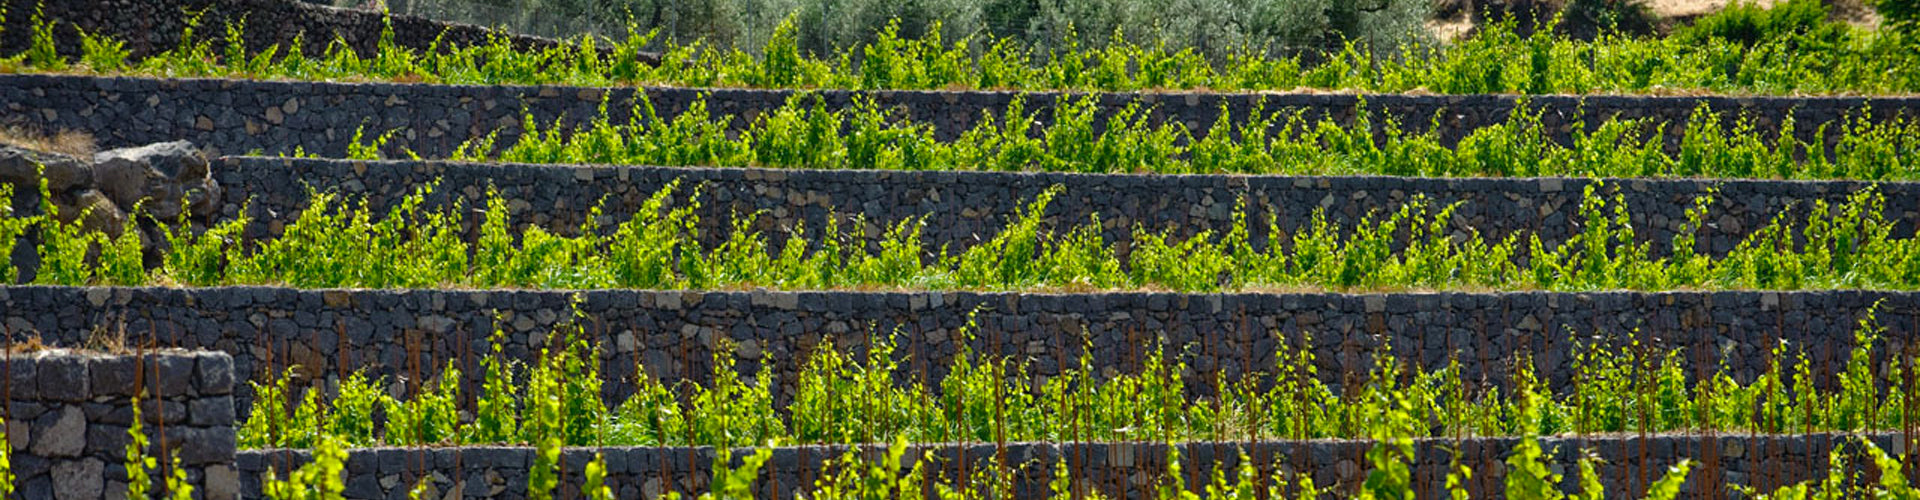 Pietradolce Vineyards Mount Etna